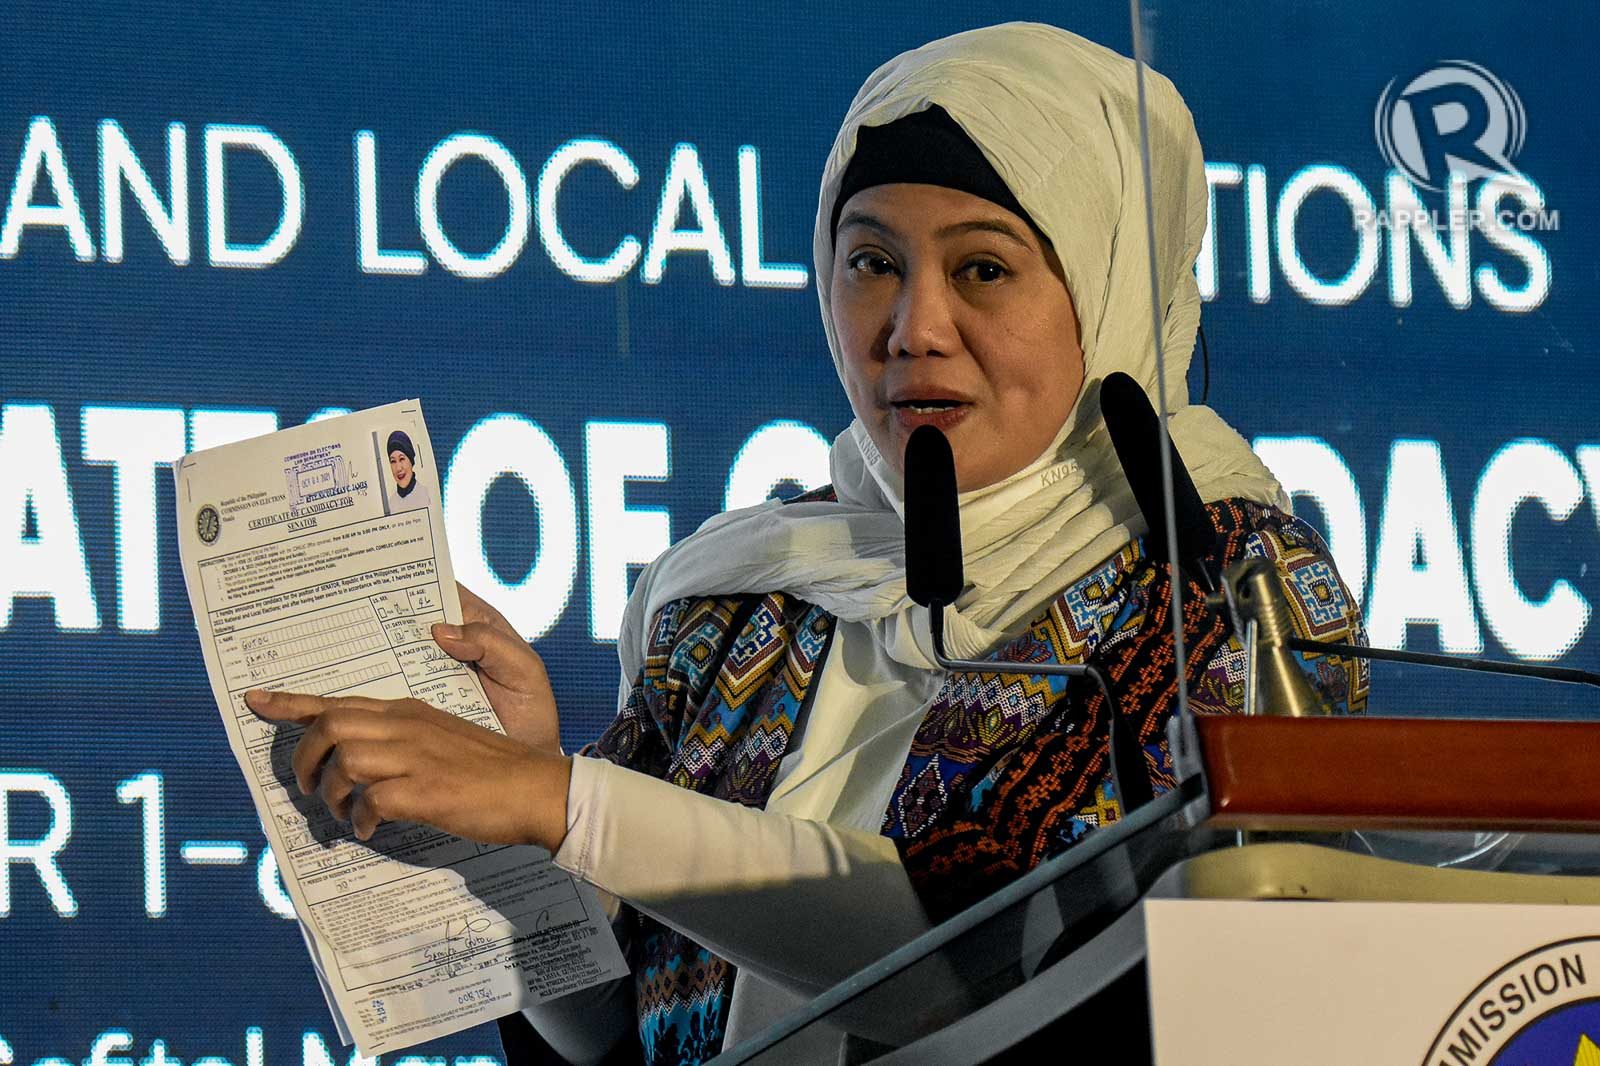 Buzzer-beater: Mindanao civic leader Samira Gutoc files candidacy for senator